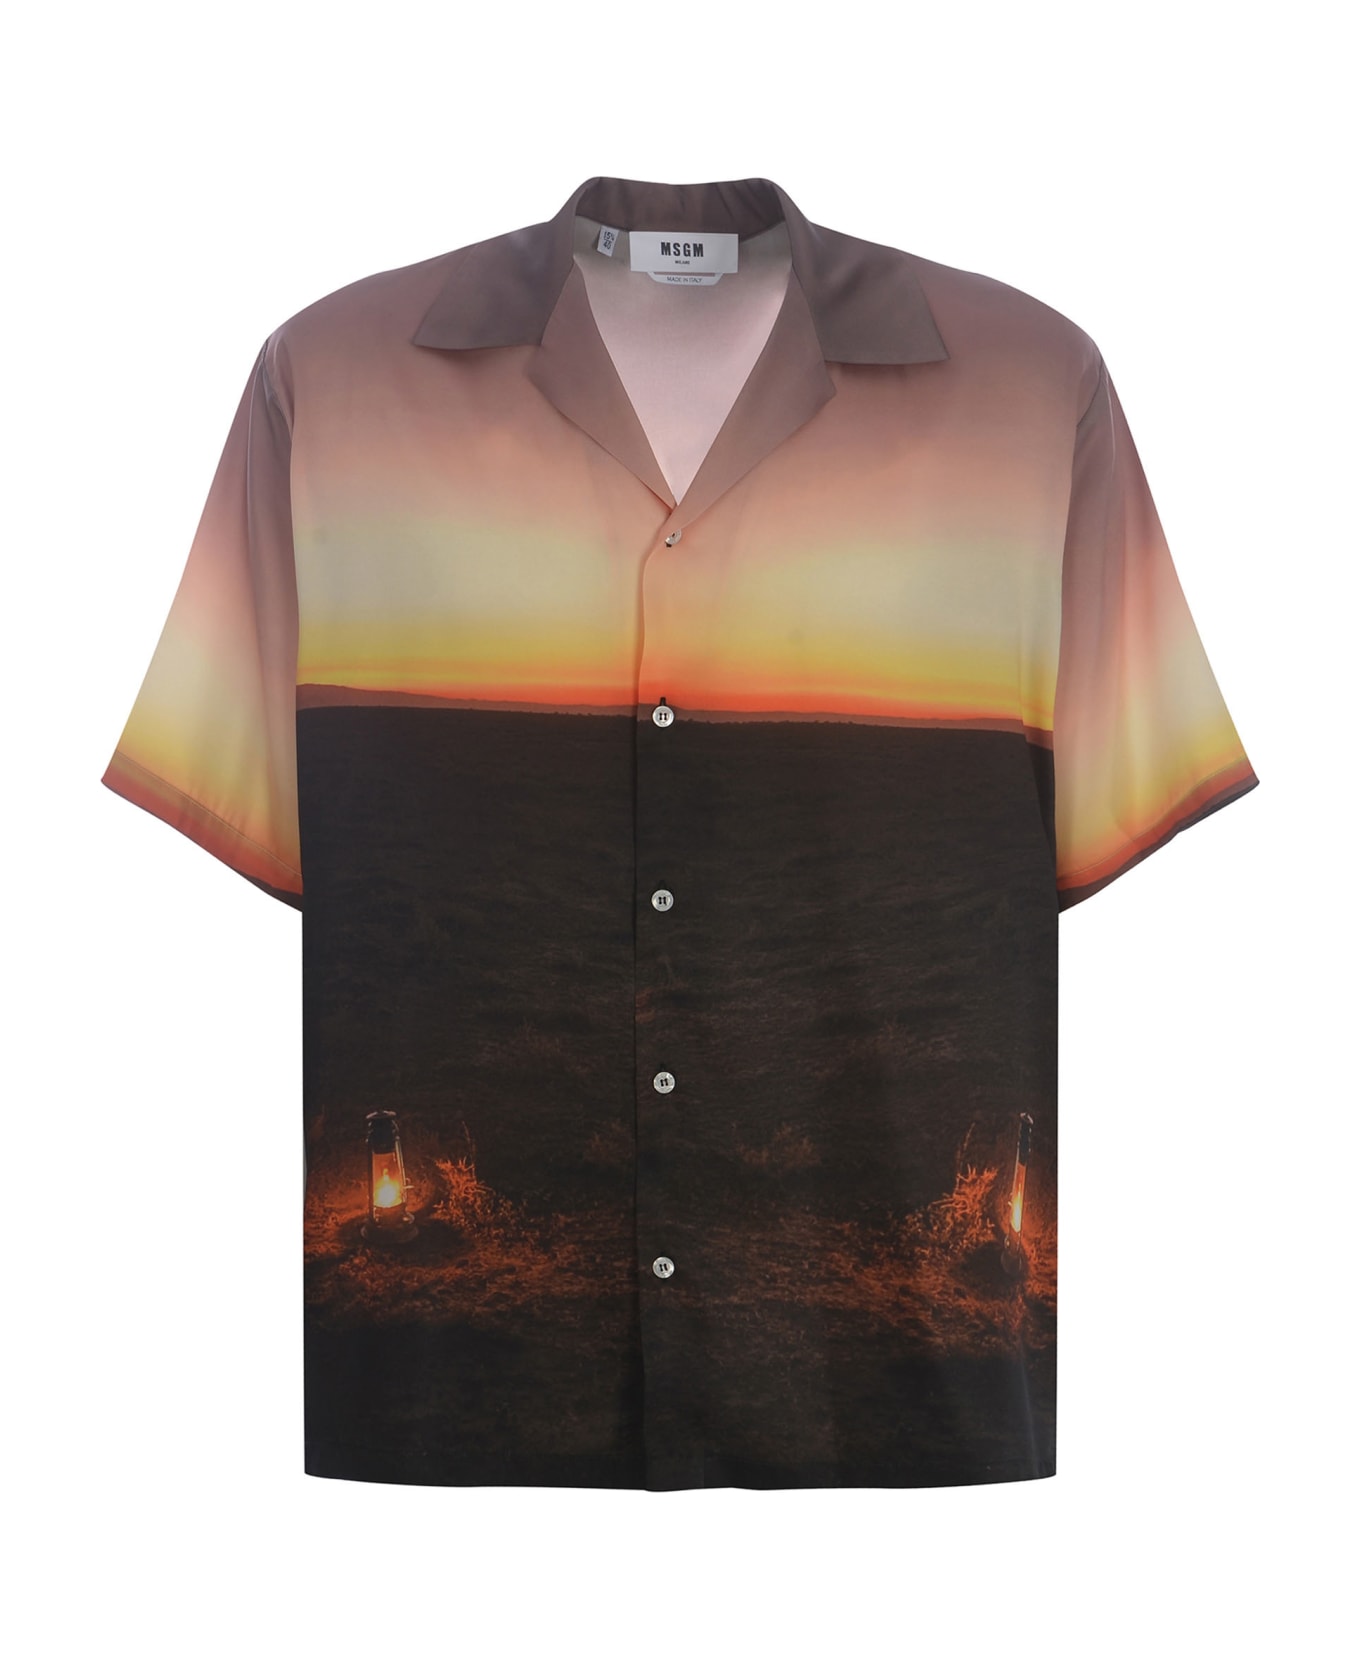 MSGM Shirt Msgm "sunset" Made Of Fluid Fabric - Multicolor